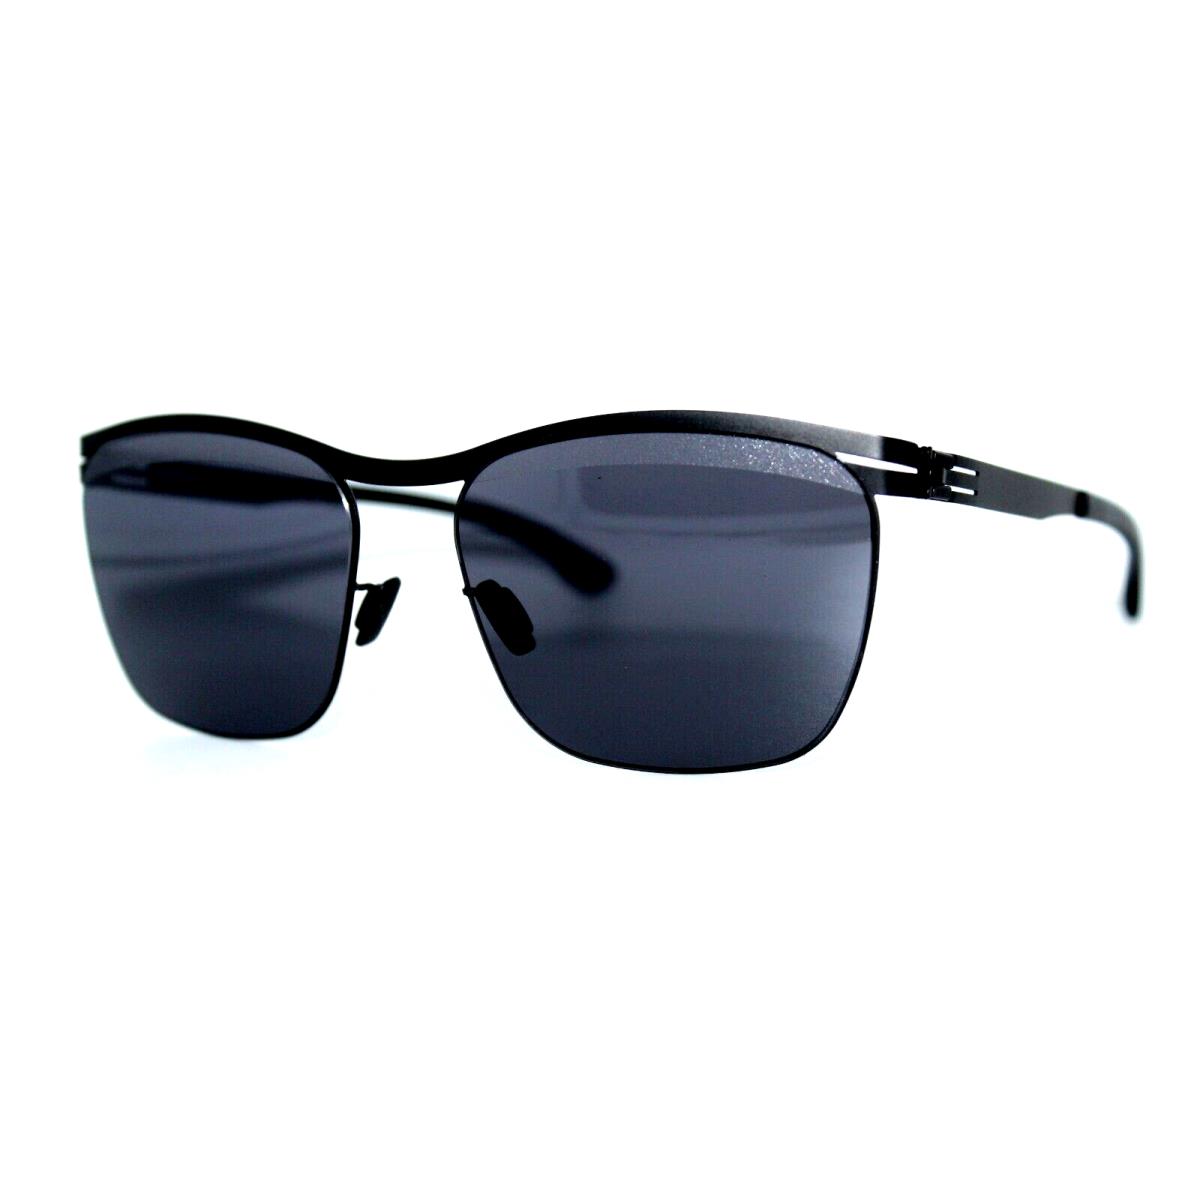 IC Berlin Tegeler See Black Sunglasses Frames 56MM W/case